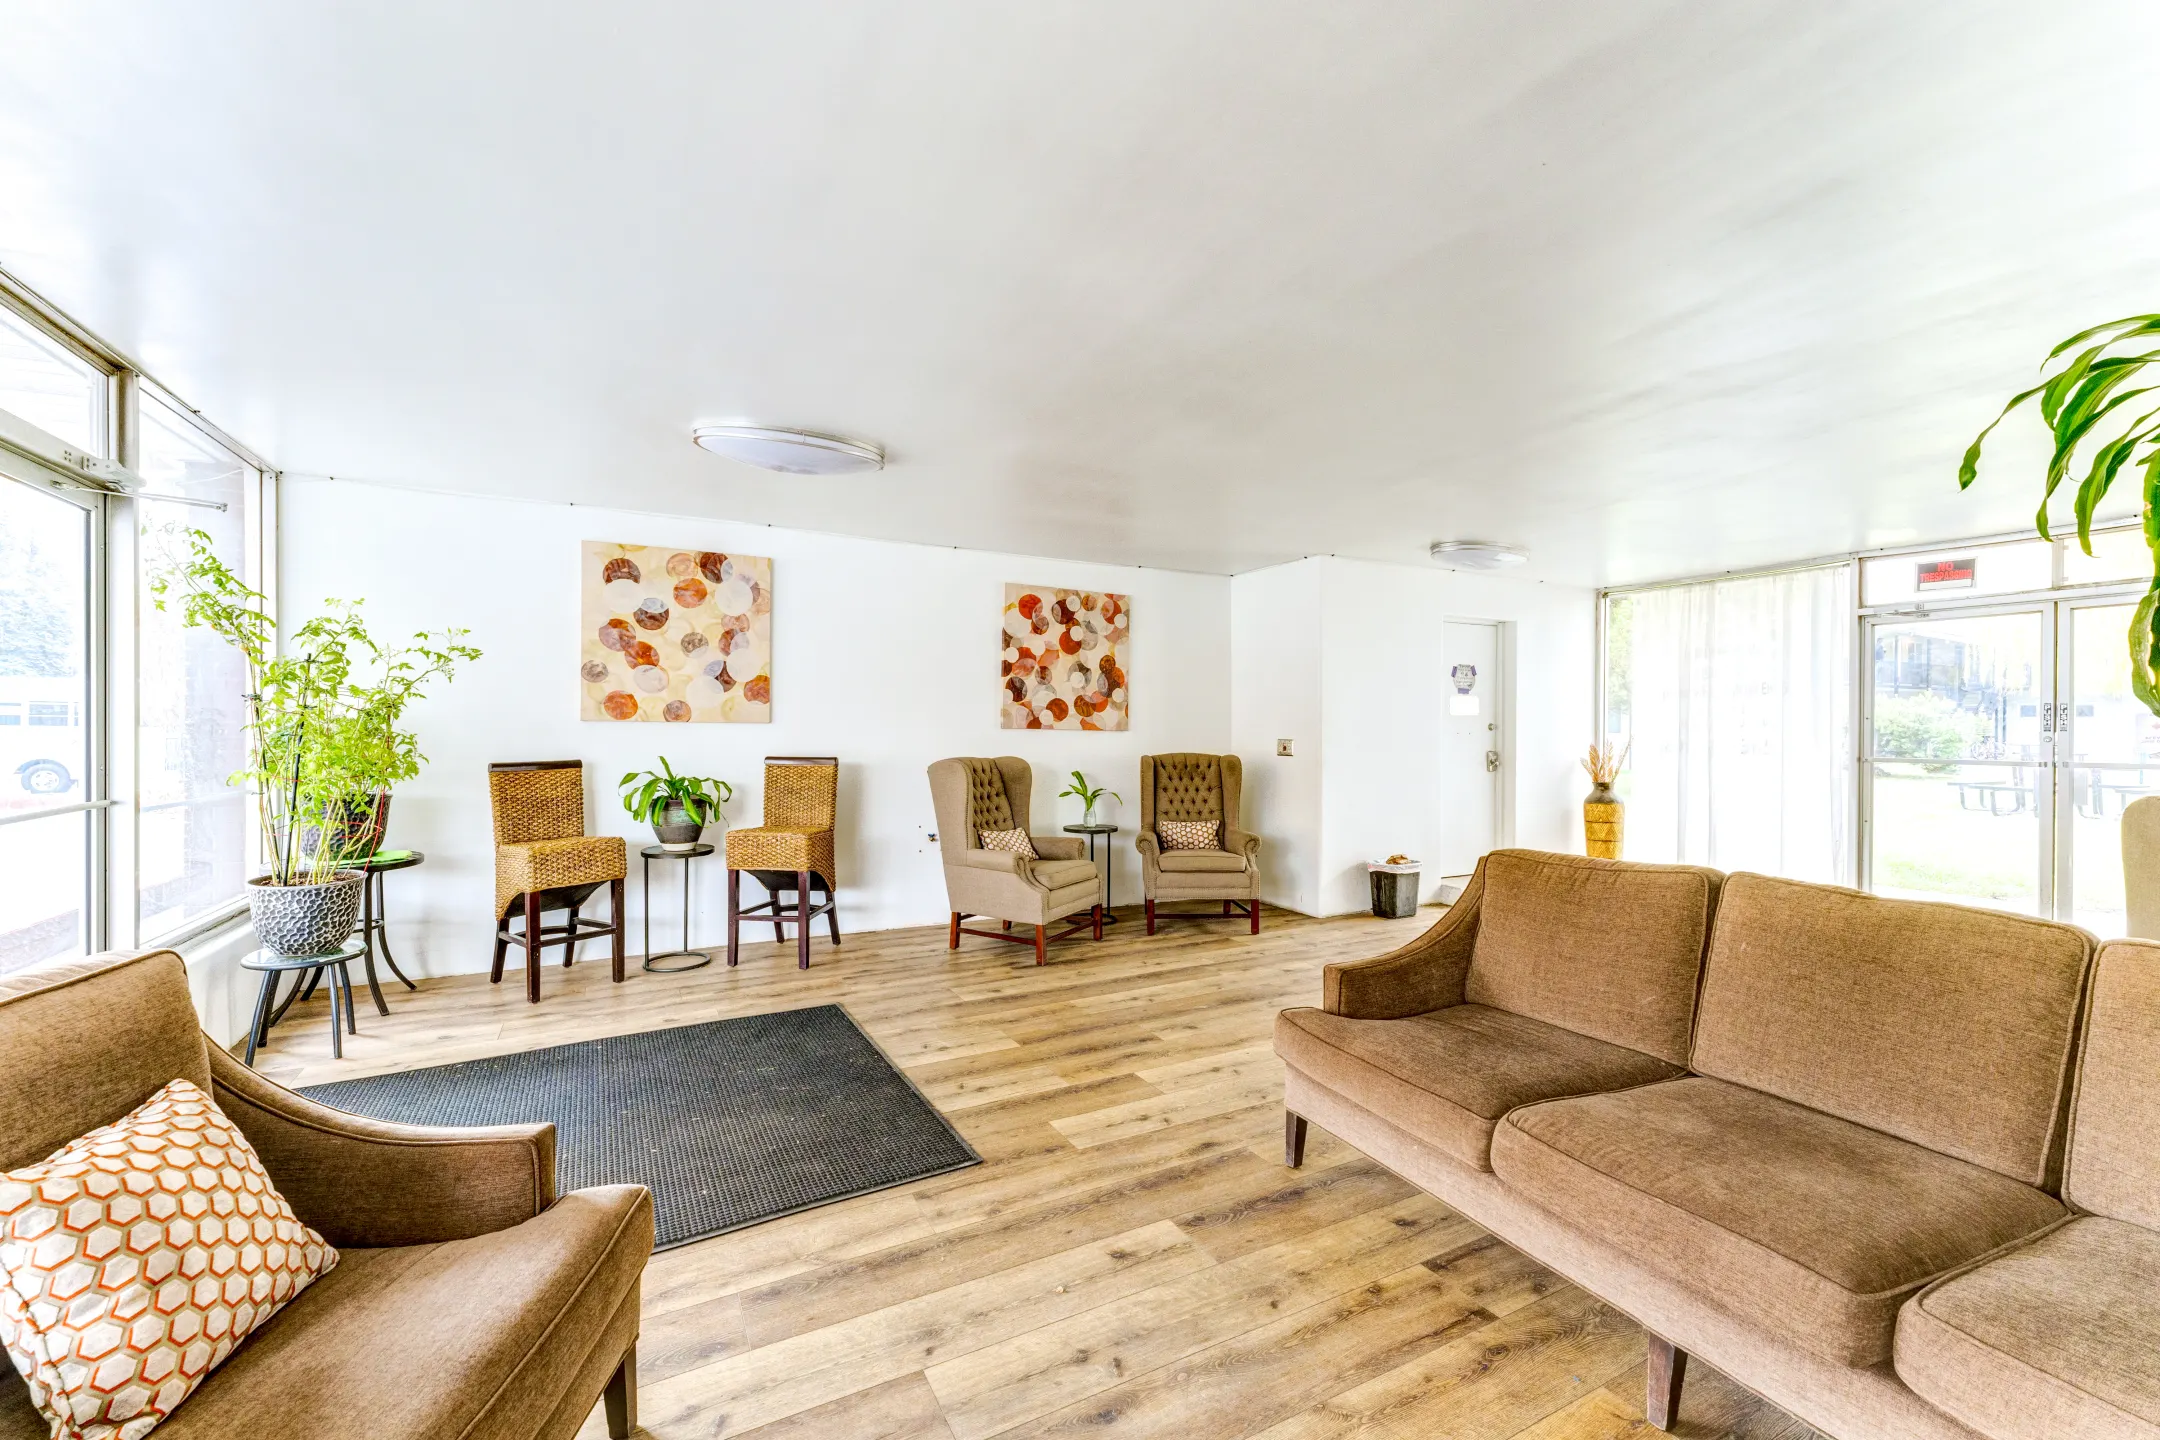 Living Room - Mirador Apartments - Ogden, UT